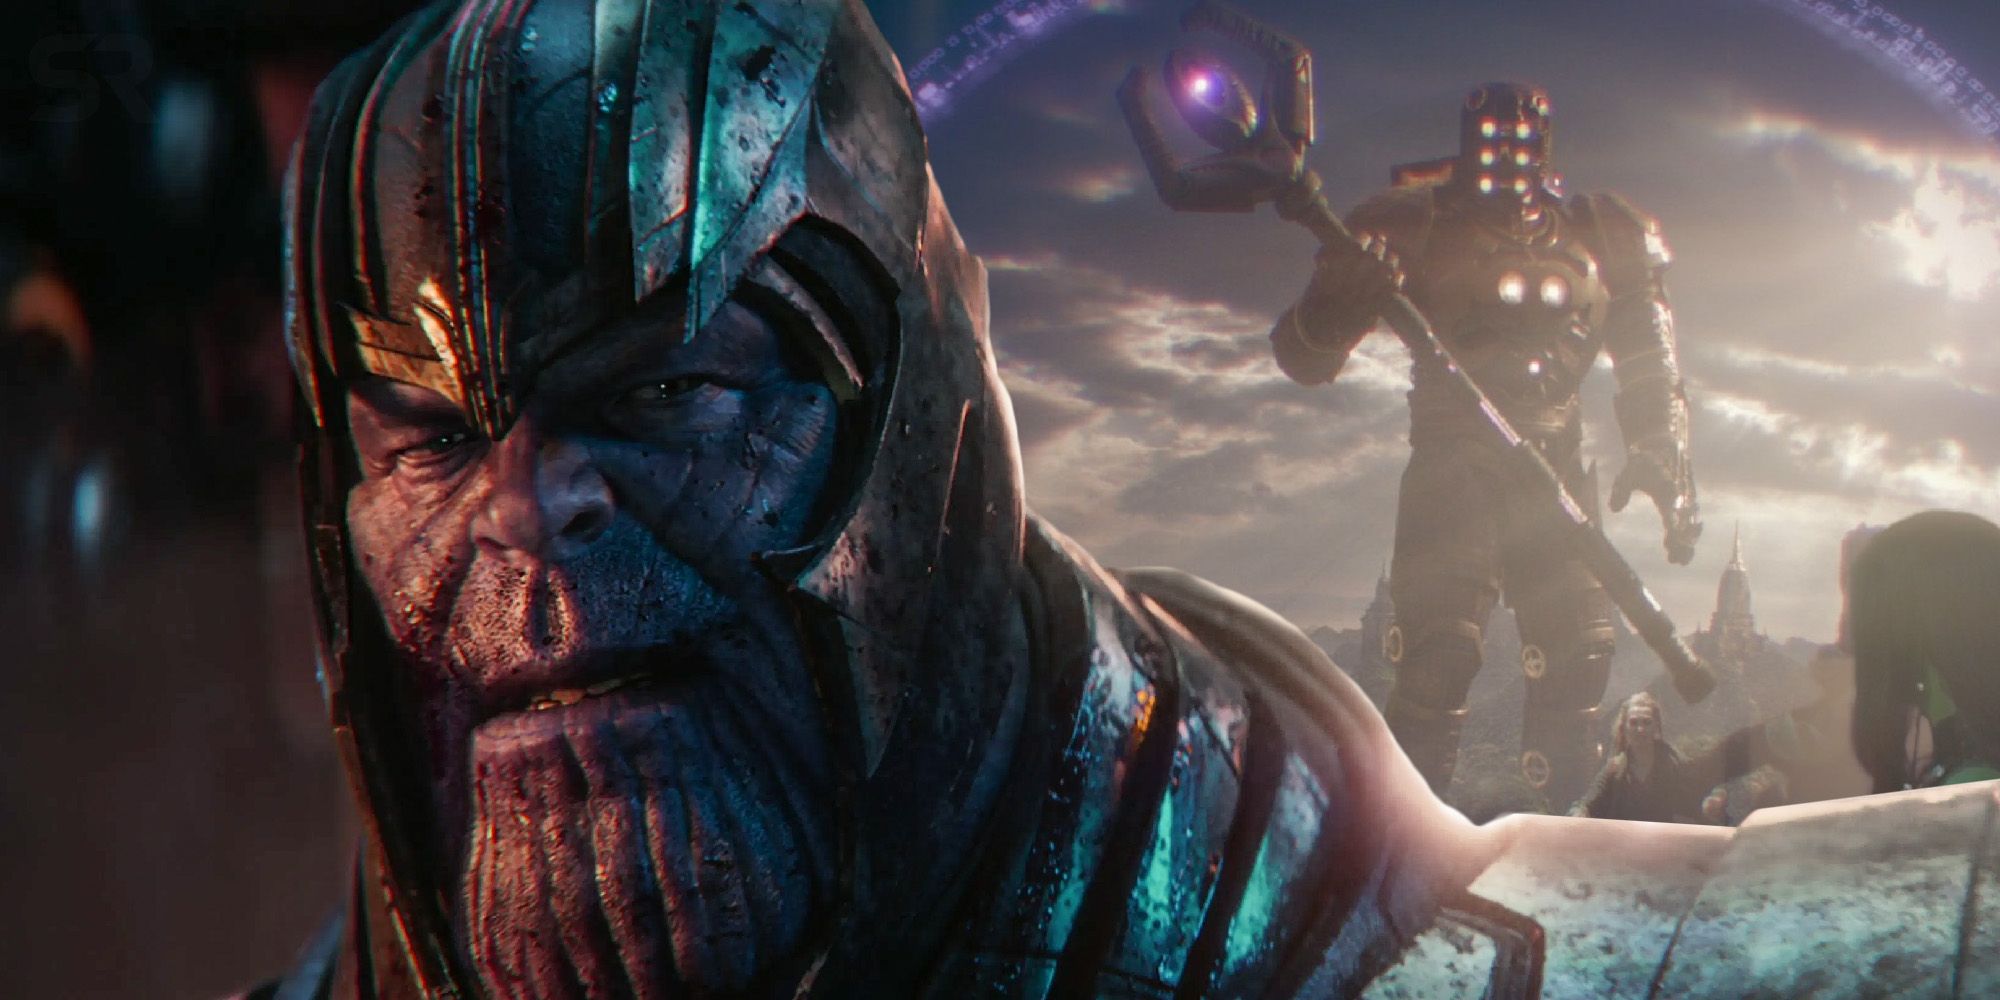 Thanos Avengers endgame Celestial Gaurdians of the galaxy